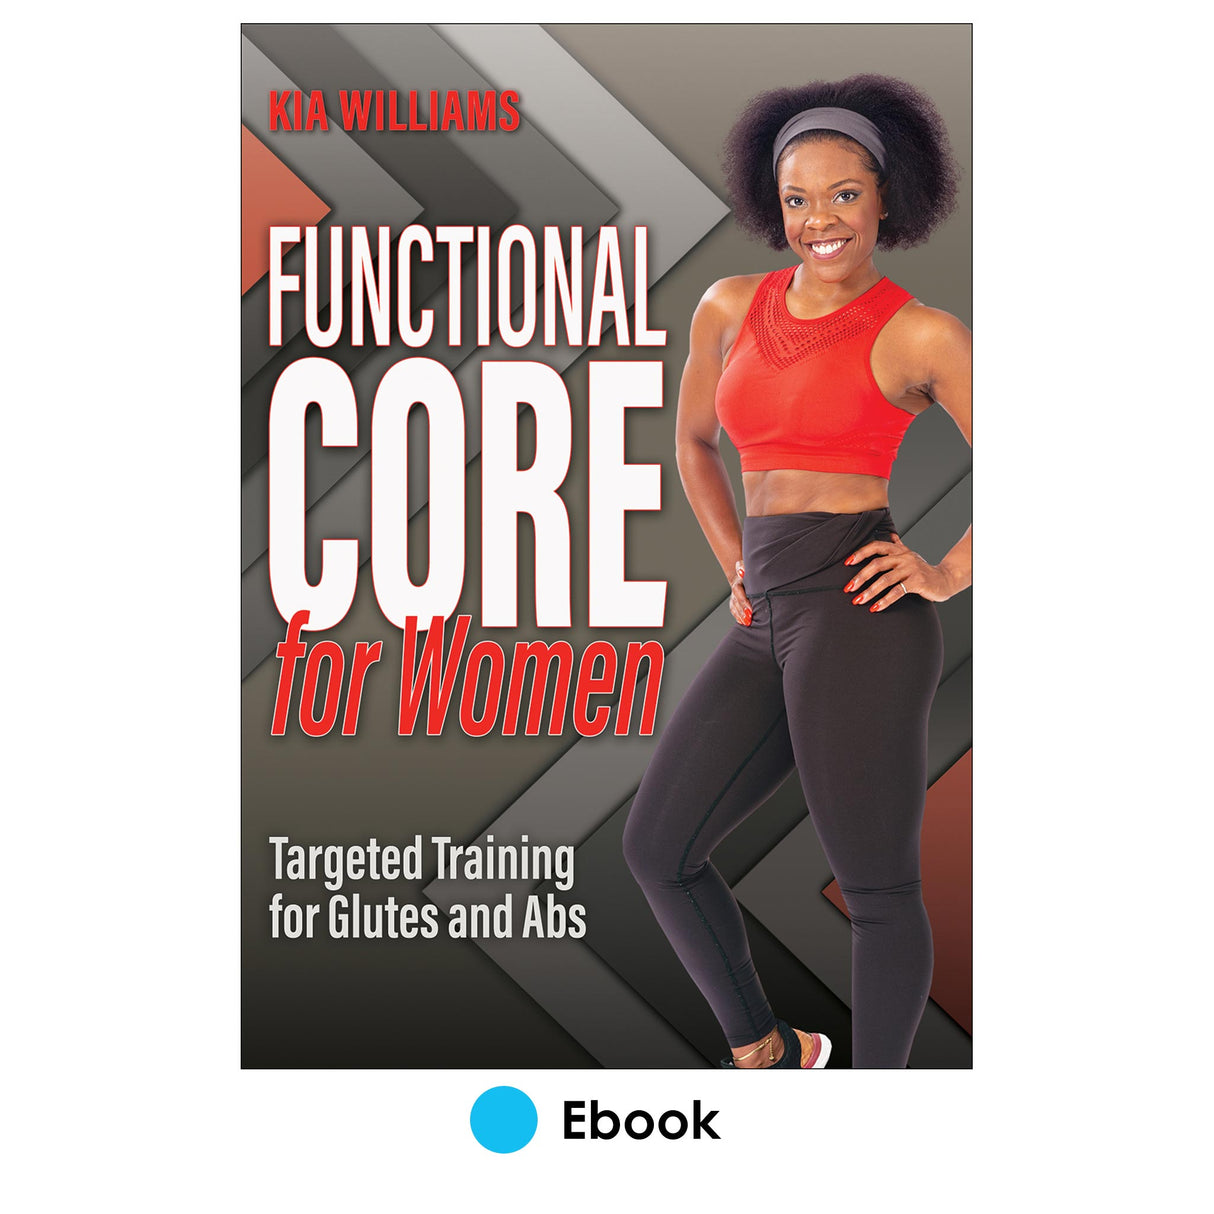 Functional Core for Women epub